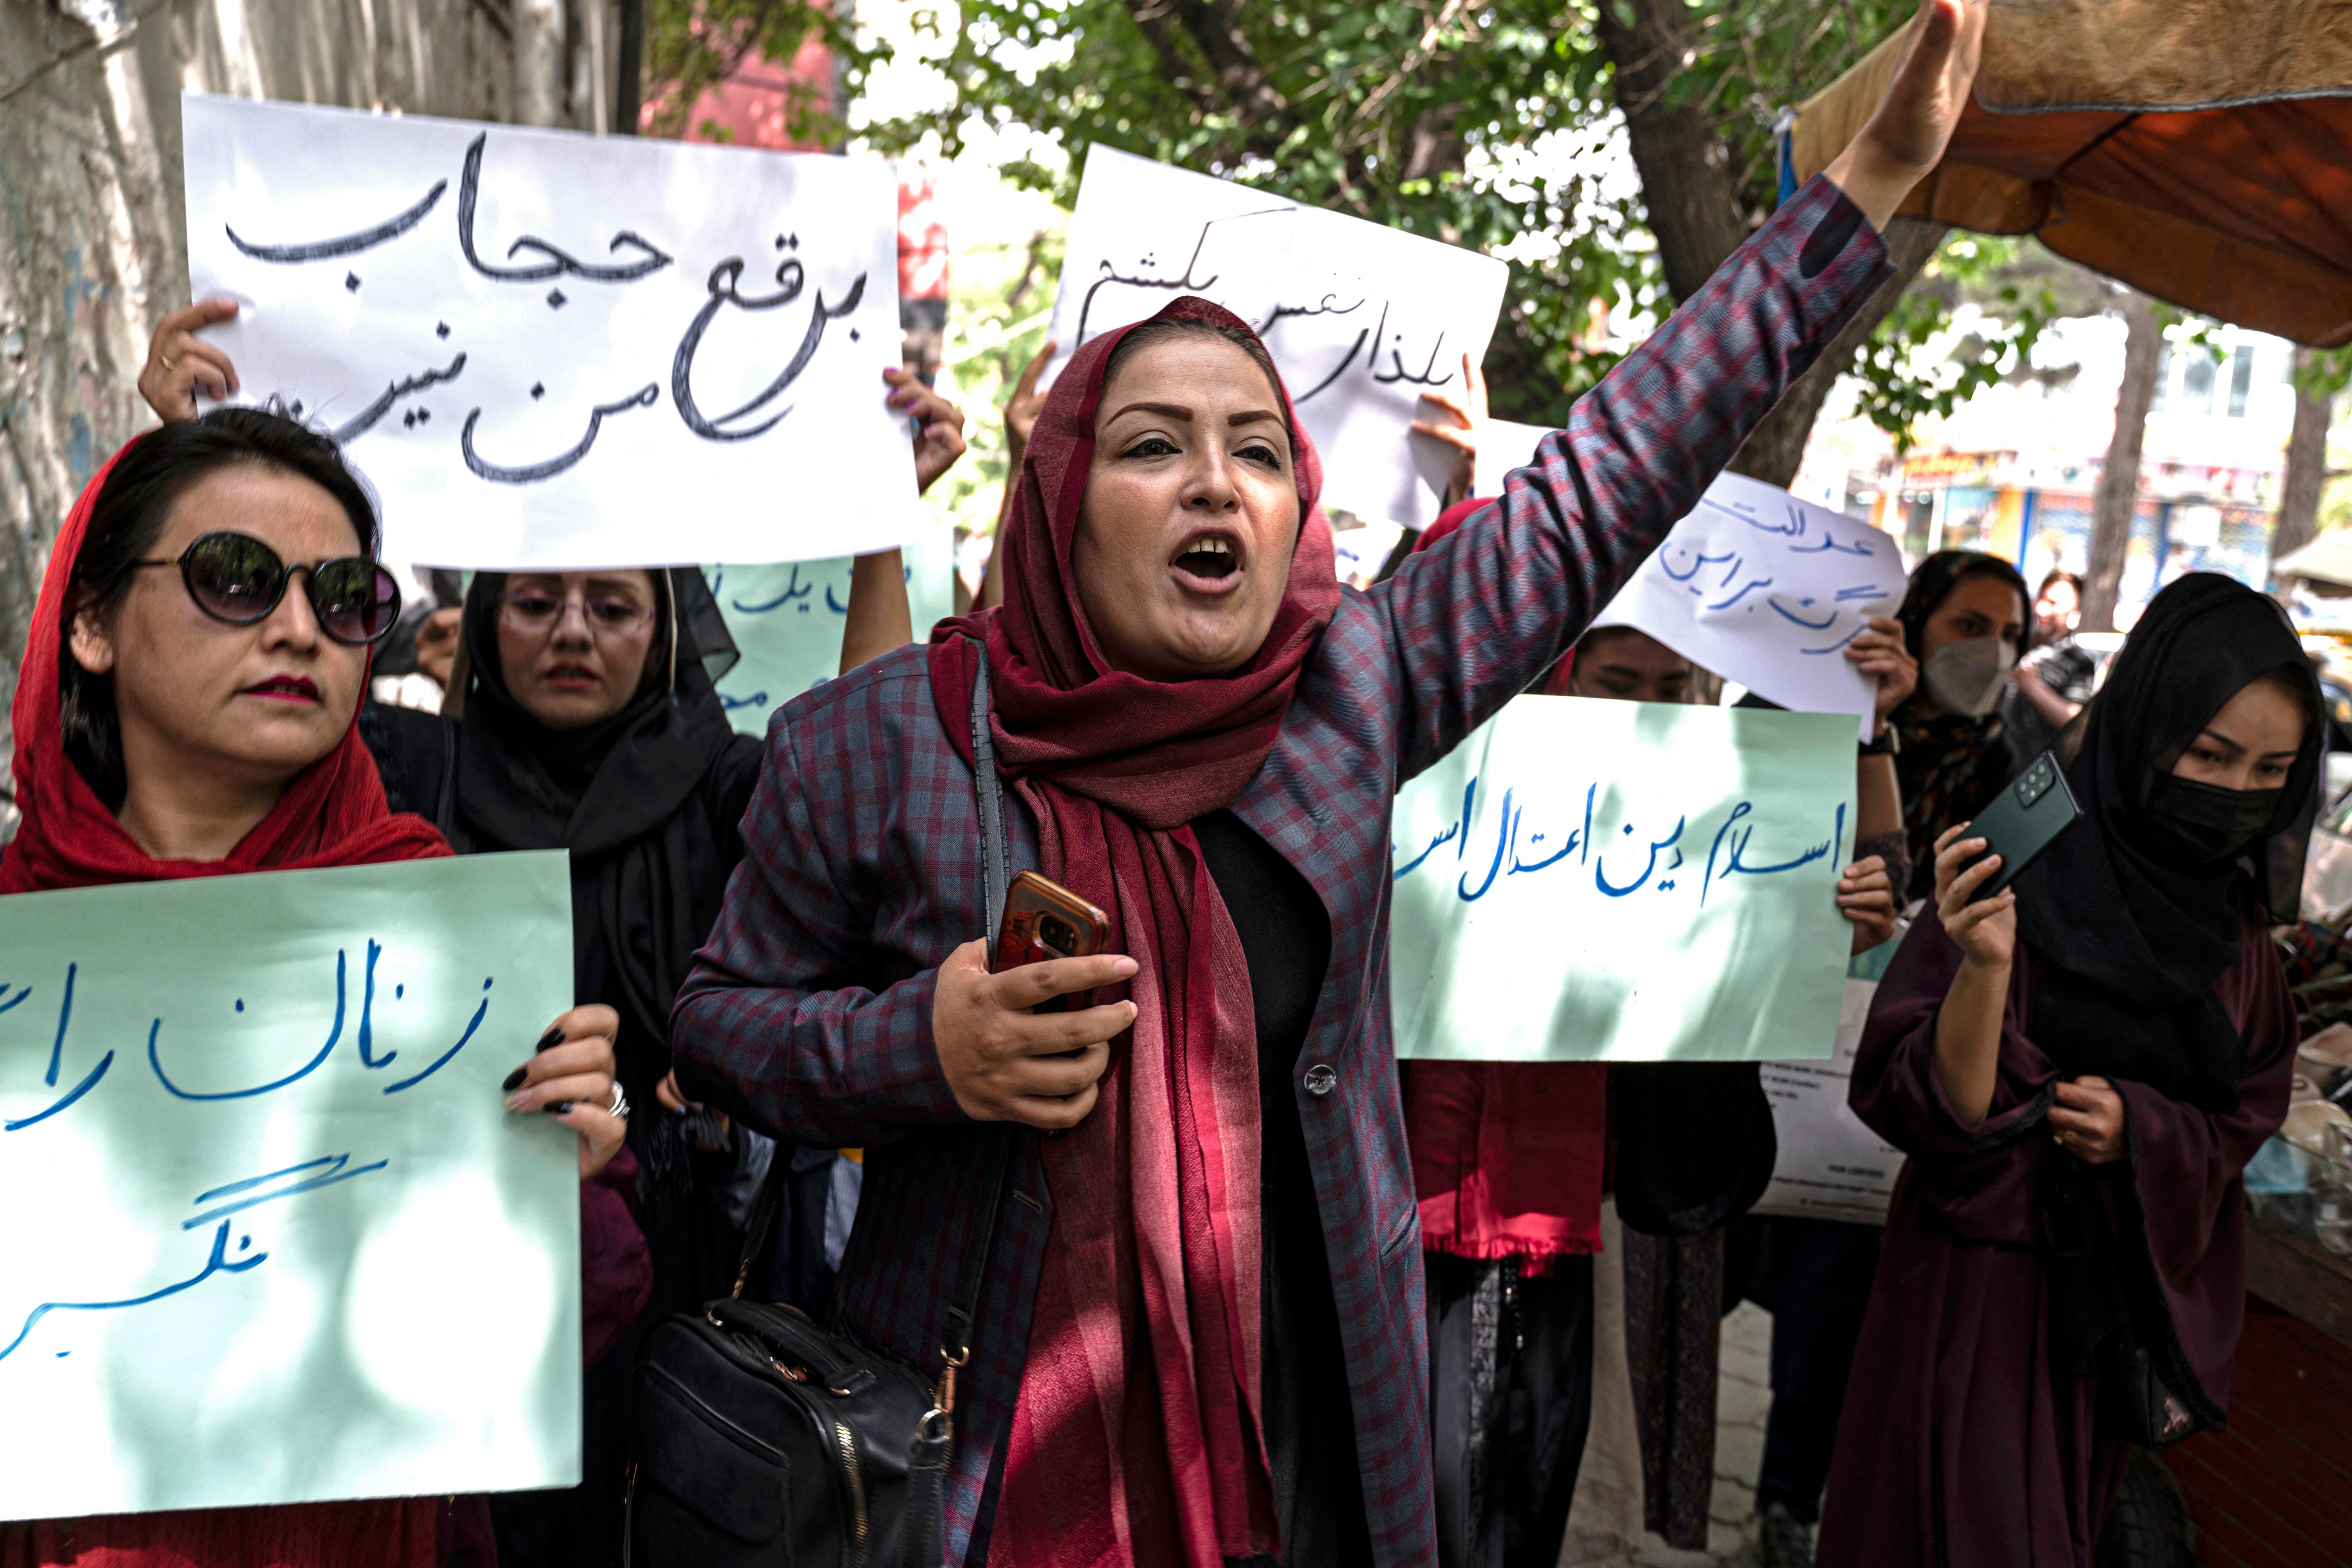 Members of Afghanistan's Powerful Women Movement